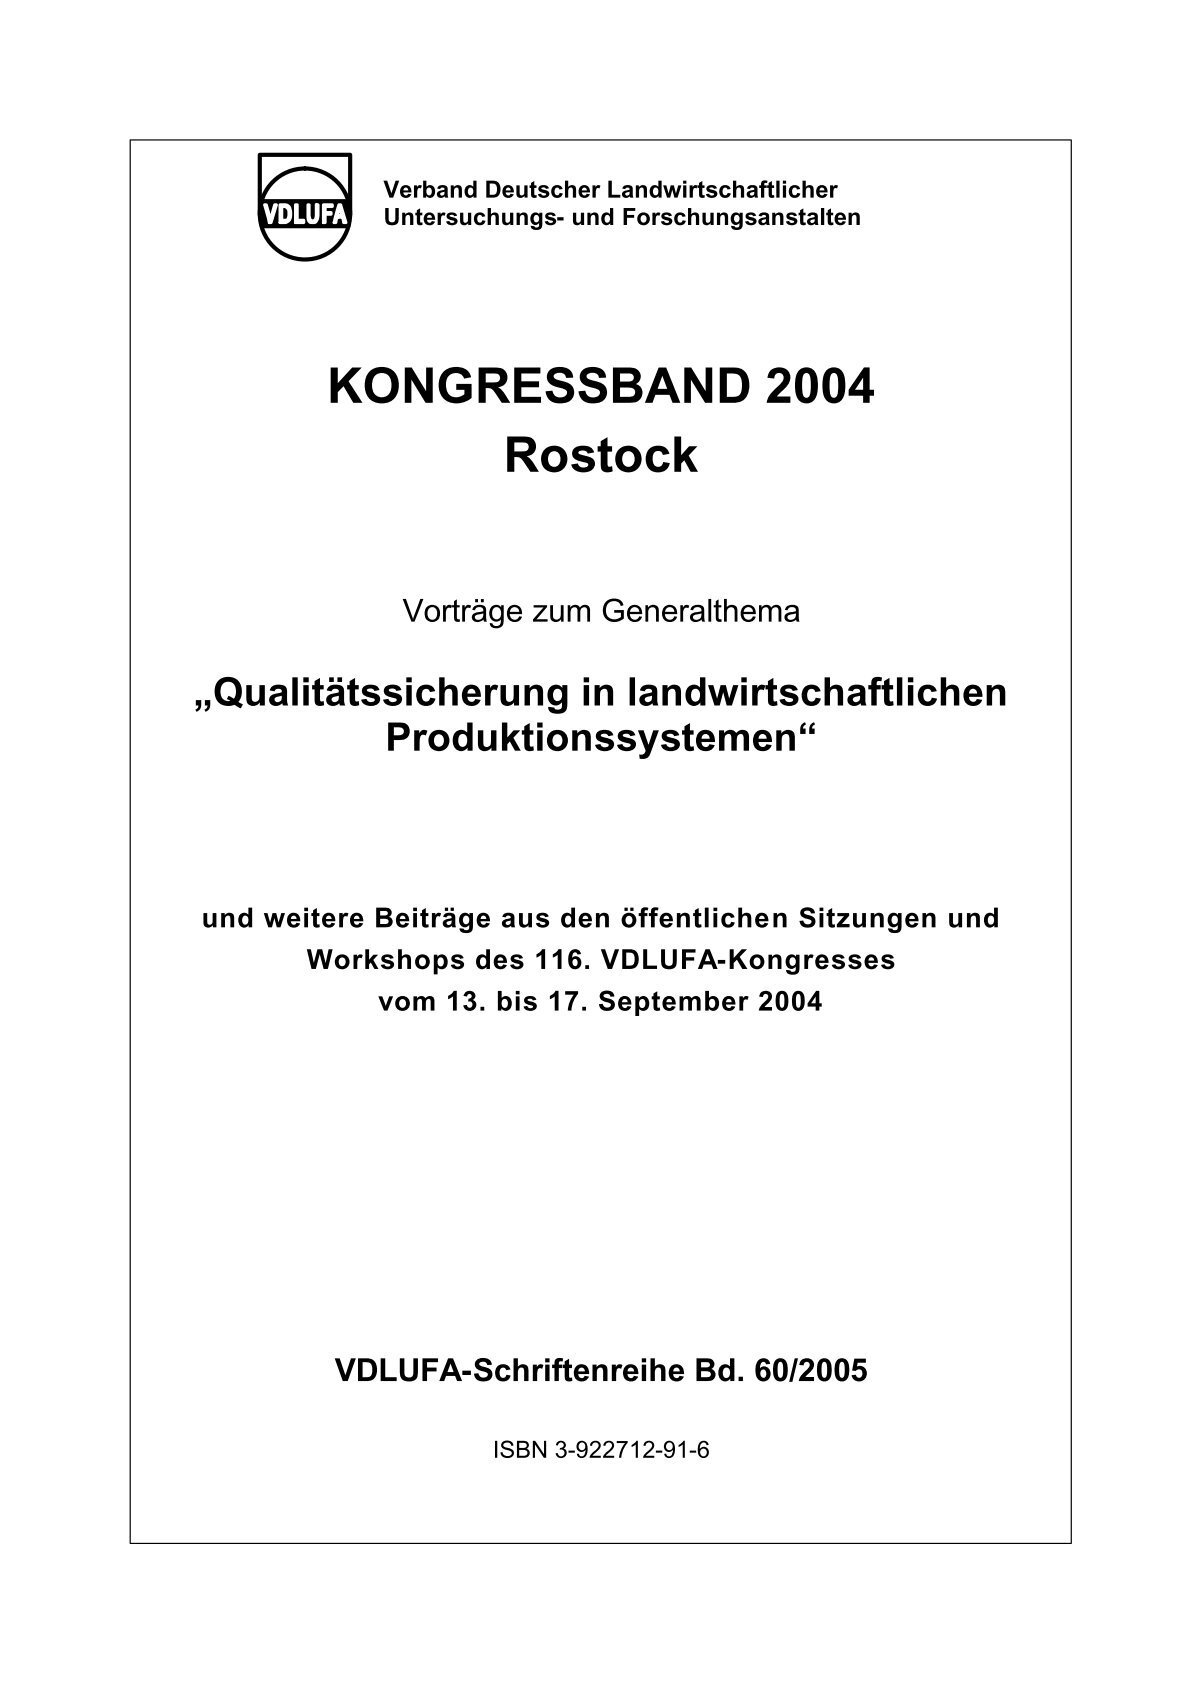 KONGRESSBAND 2004 Rostock - vdlufa